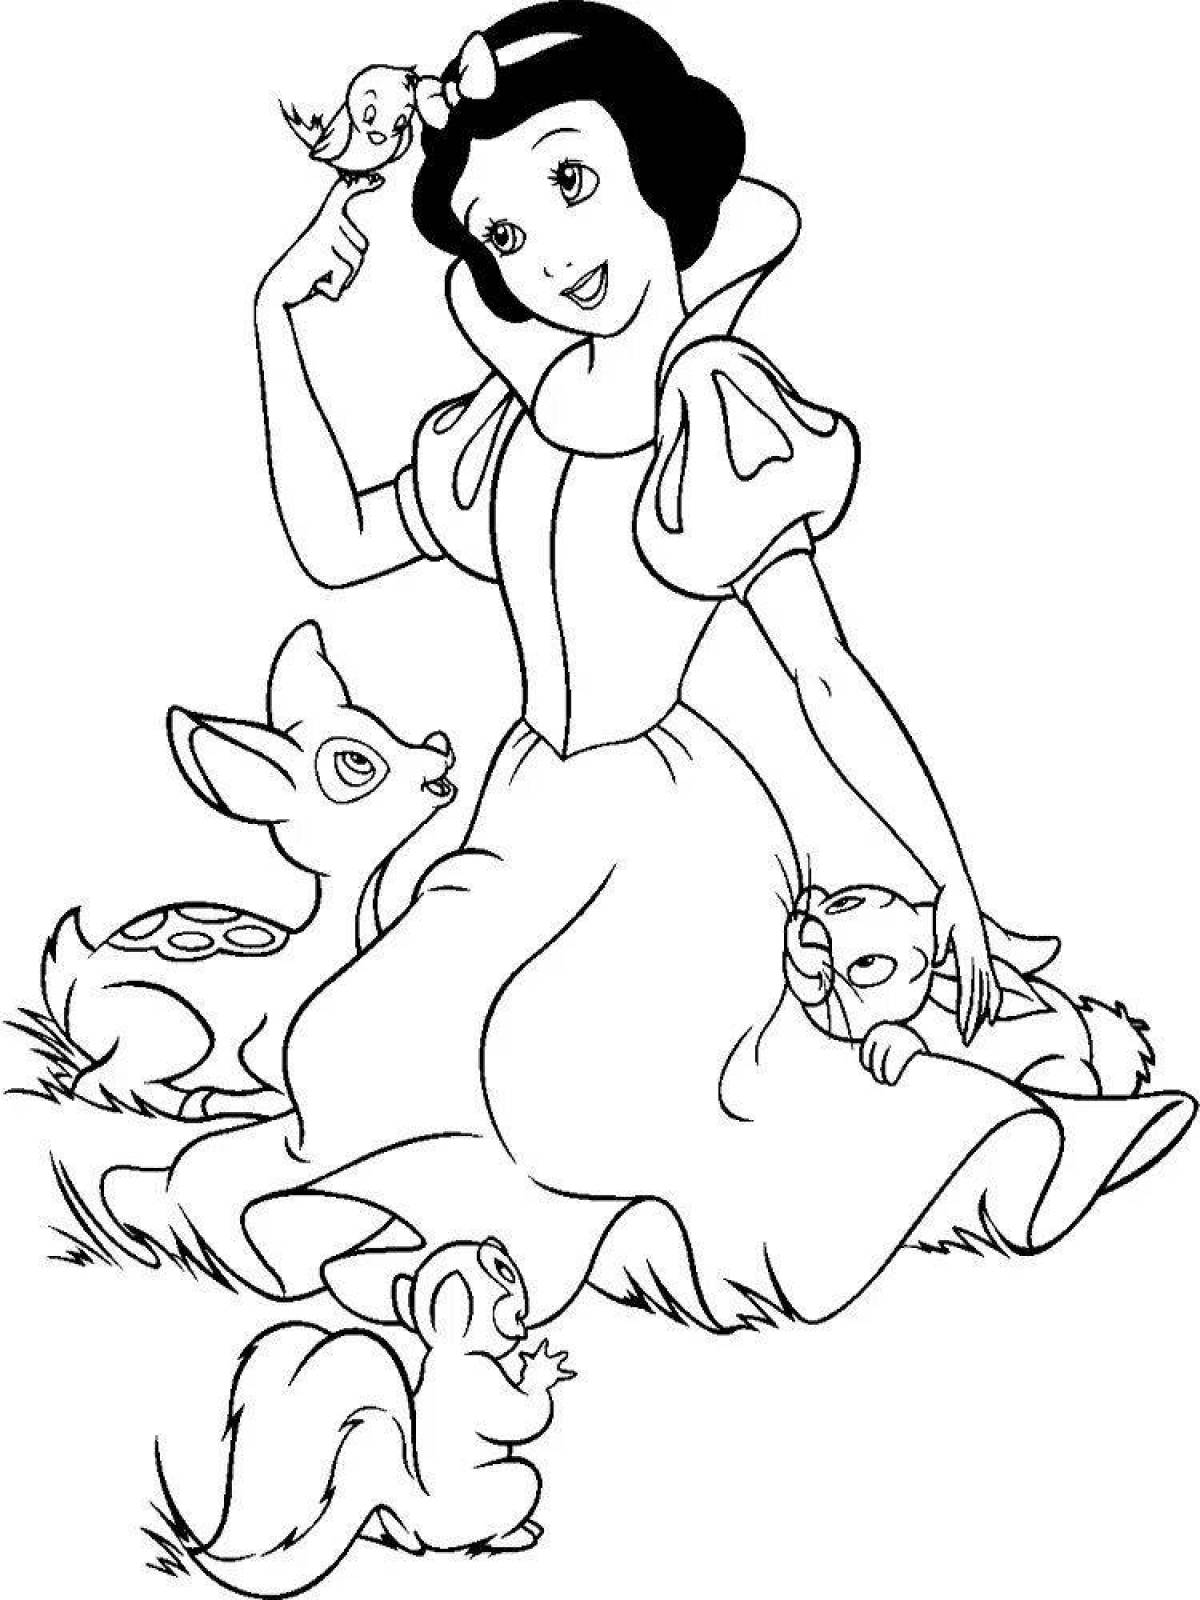 Coloring page gorgeous snow white princess